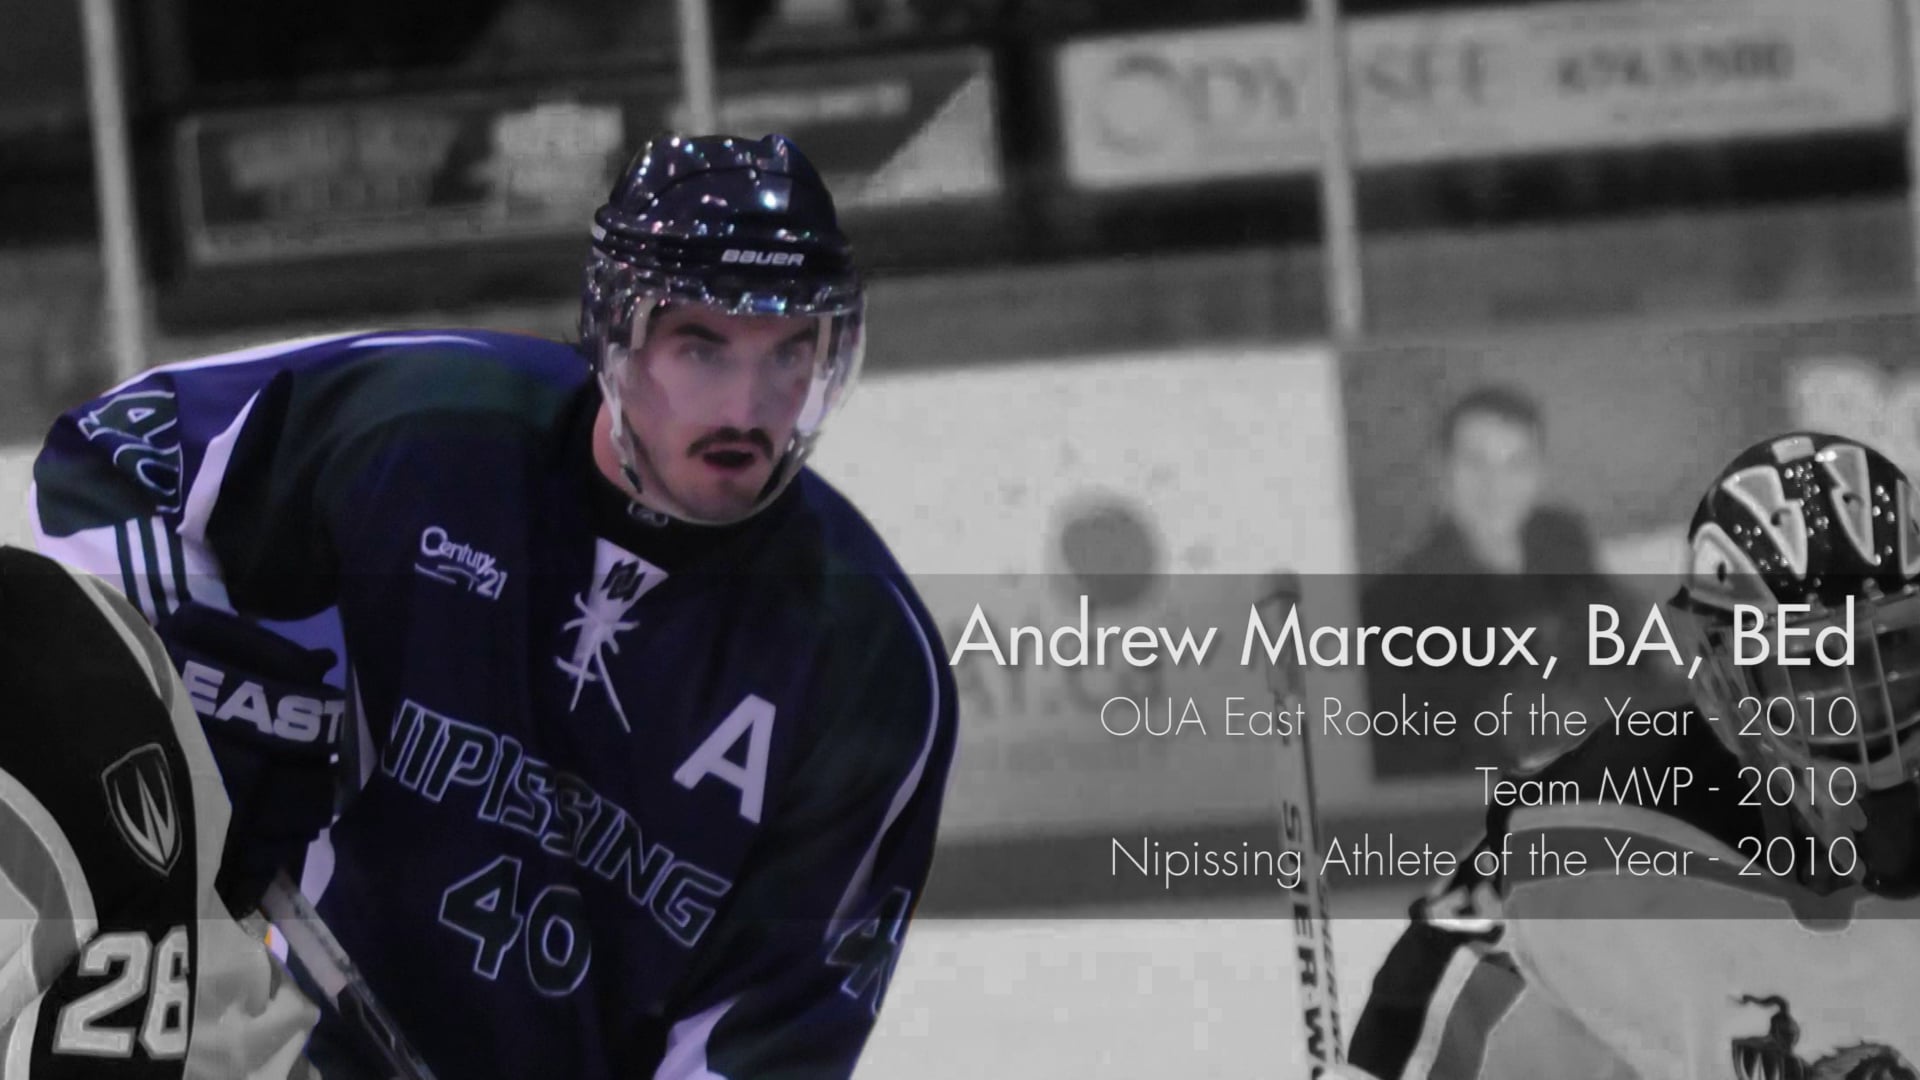 Student-Athlete testimonial Andrew Marcoux on Vimeo